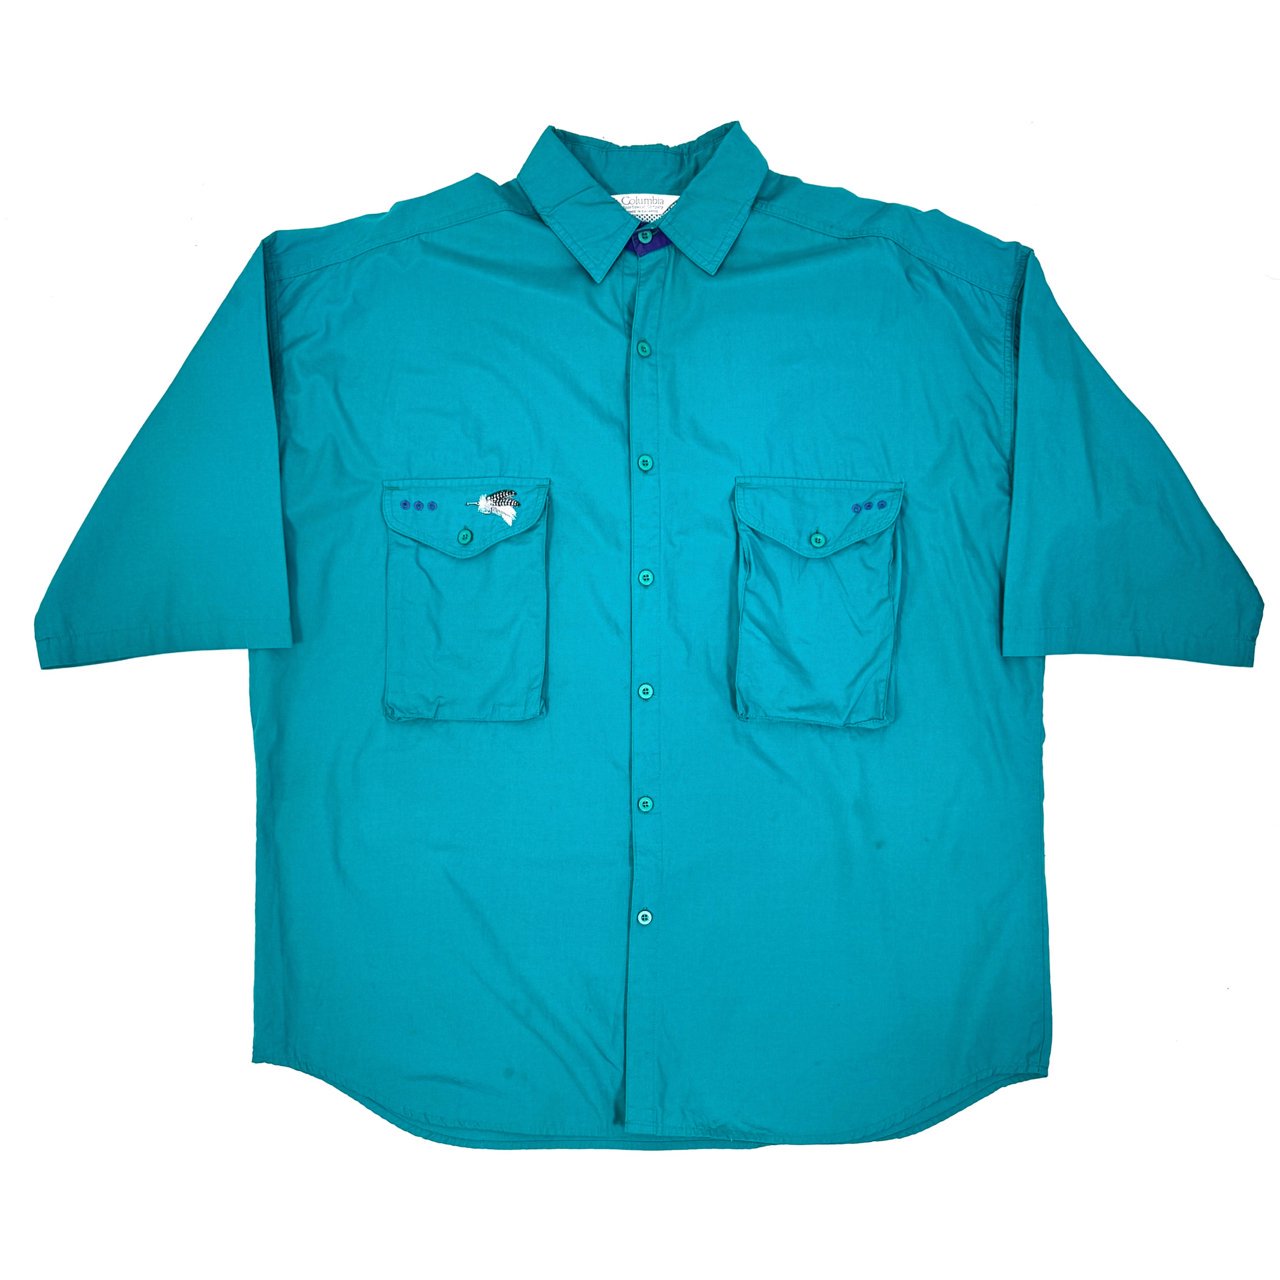 1980~90s COLUMBIA S/S Fishing shirts XL Turquoise green 